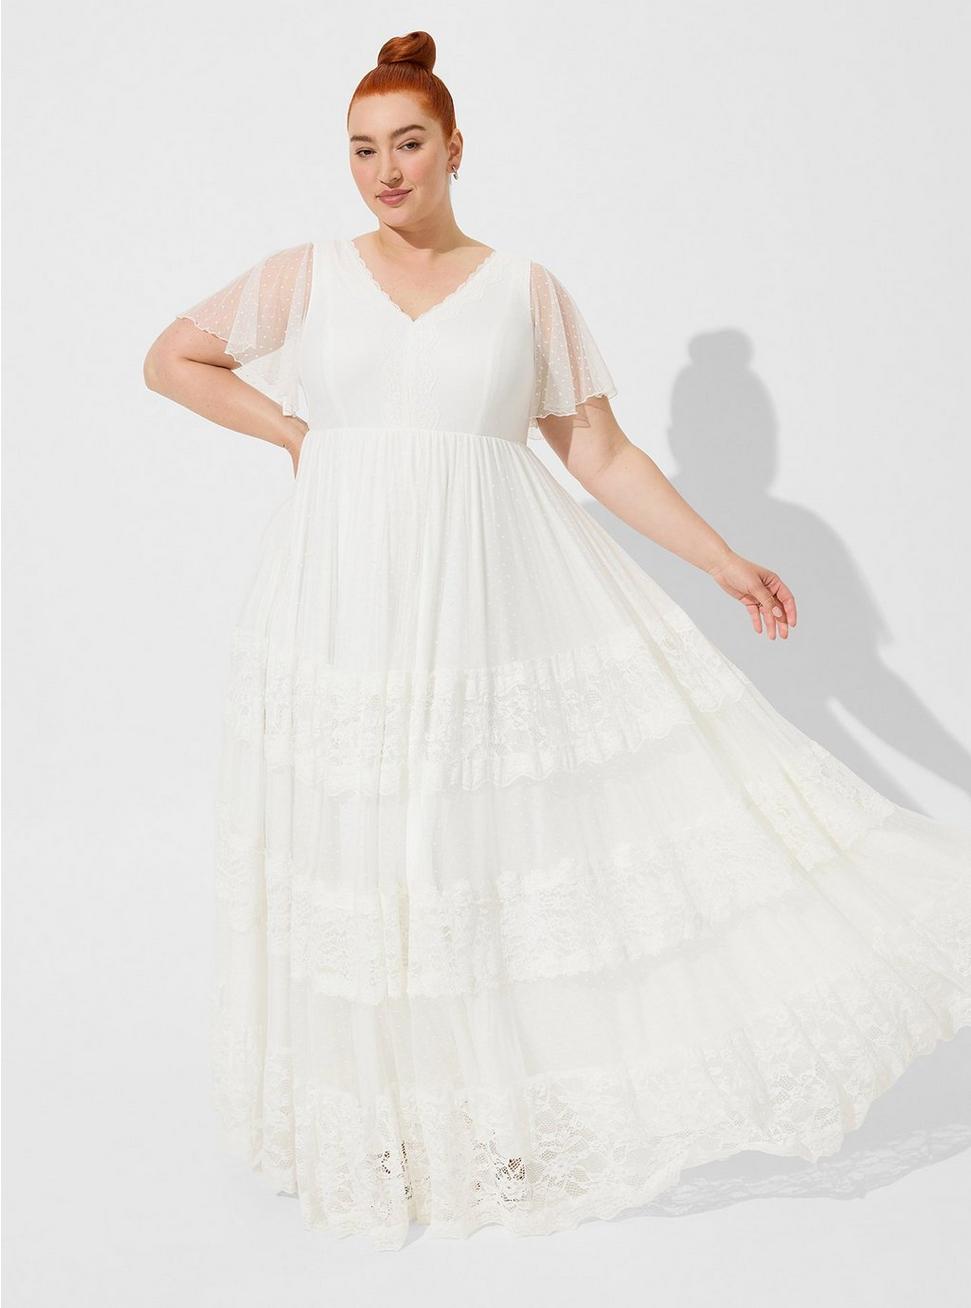 Plus Size - Ivory Lace A-line Boho Wedding Dress - Torrid